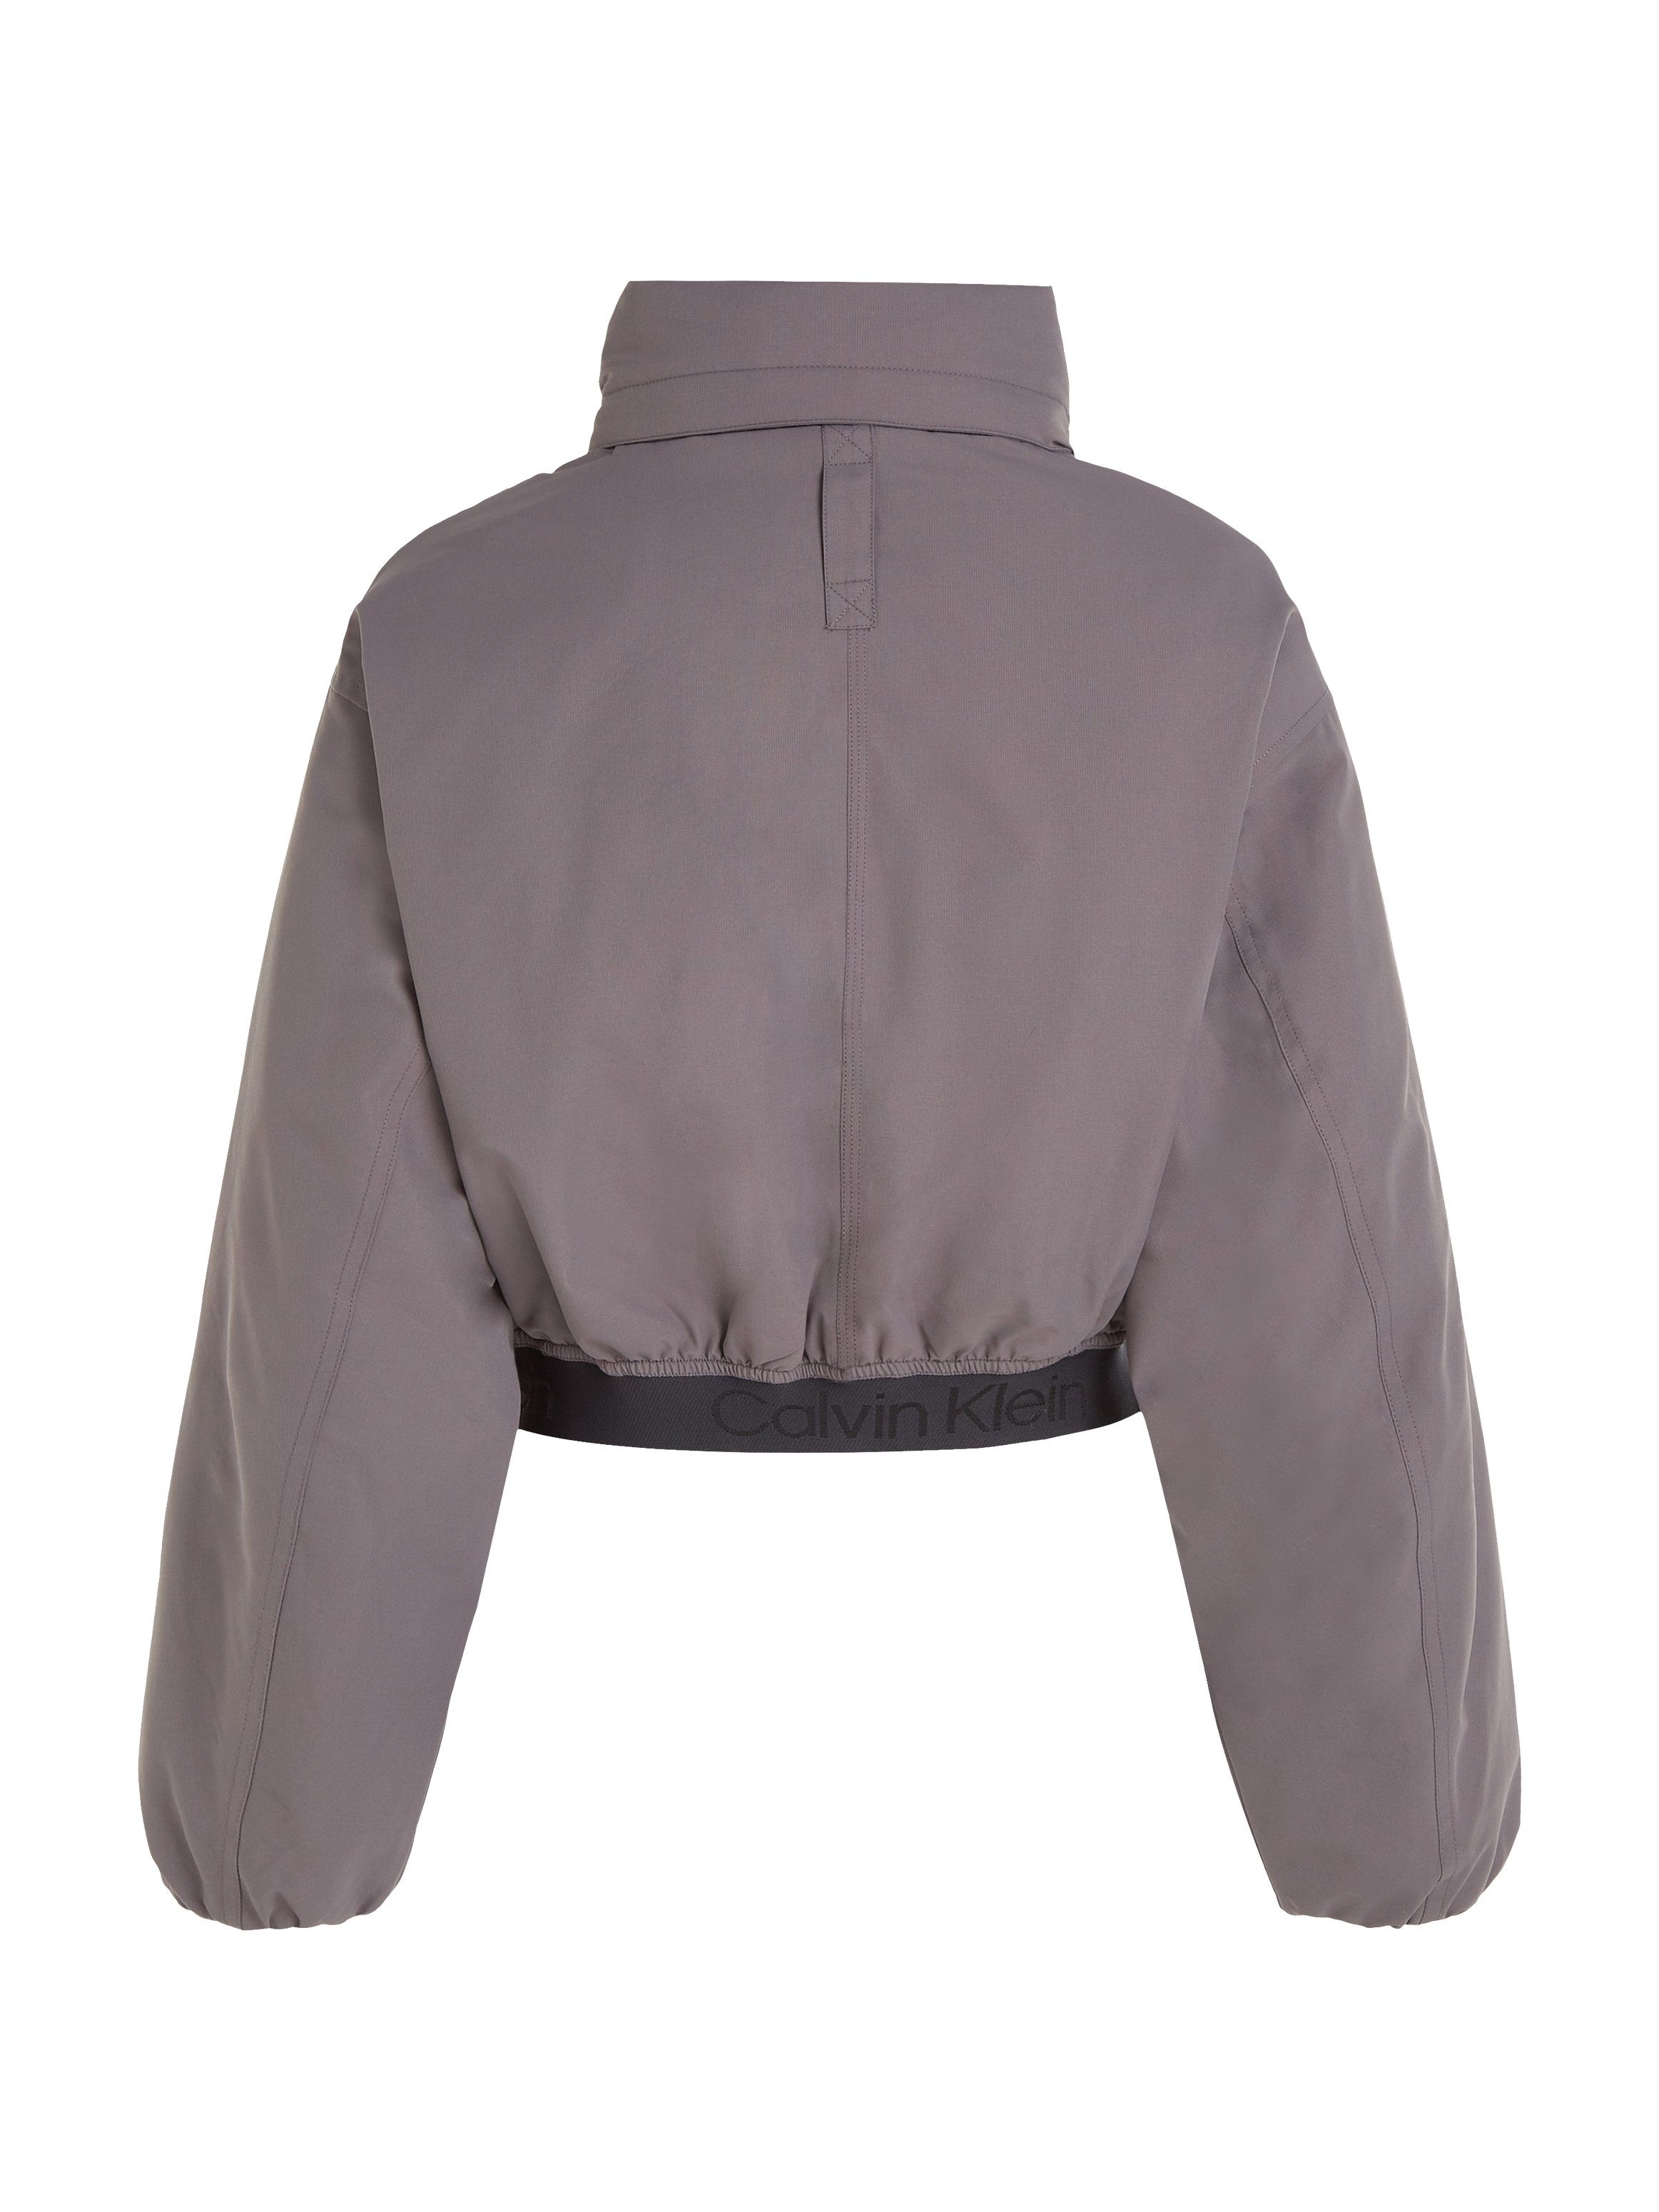 Calvin Klein Sport Outdoorjacke PW Padded grau Jacket 